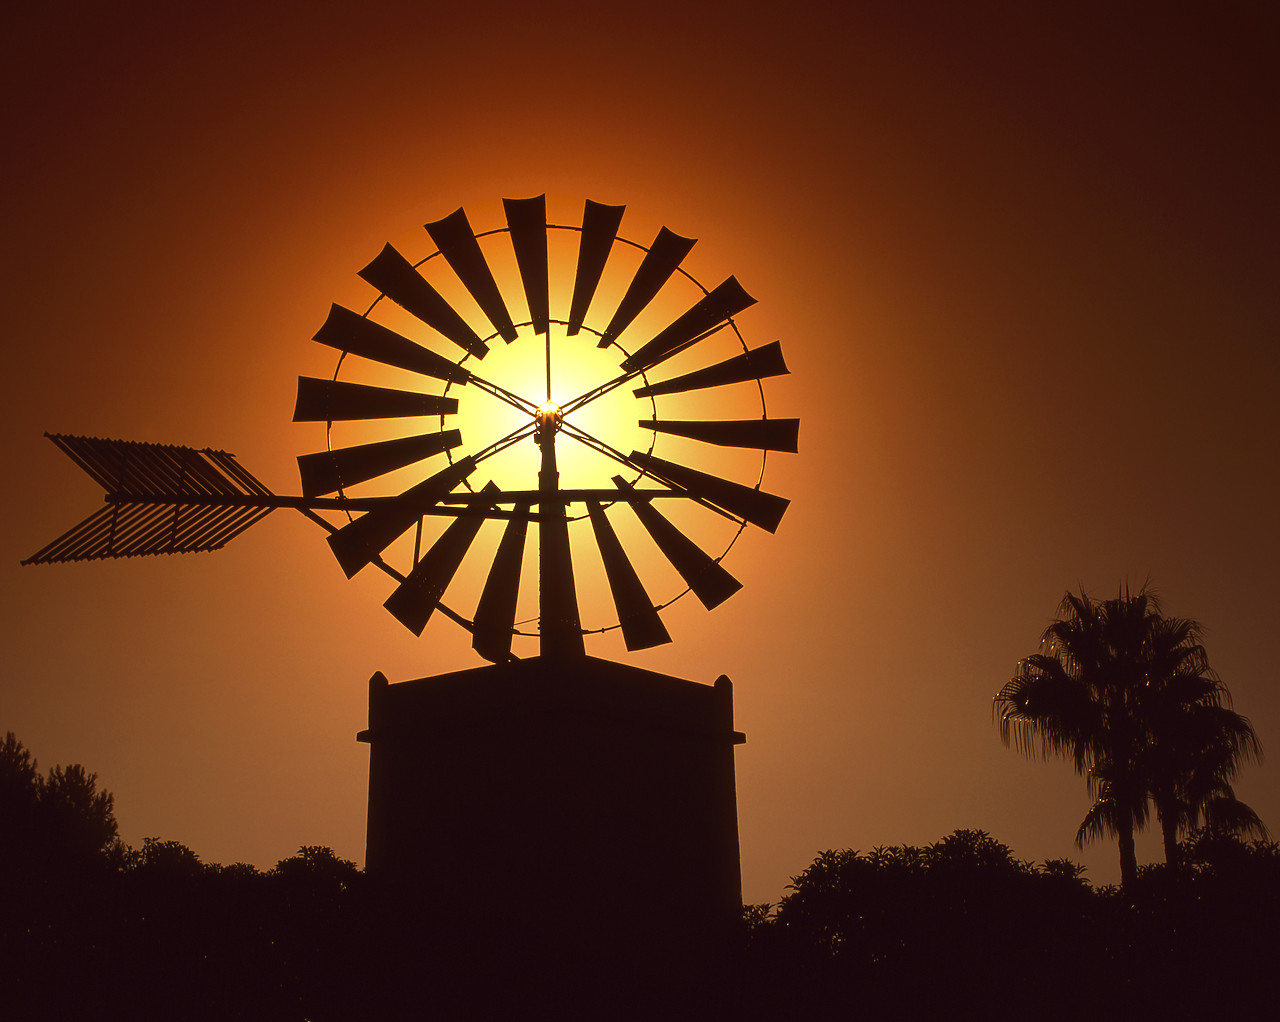 #050275-1 - Traditional Windmill in Silhouette, Palma, Mallorca, Spain